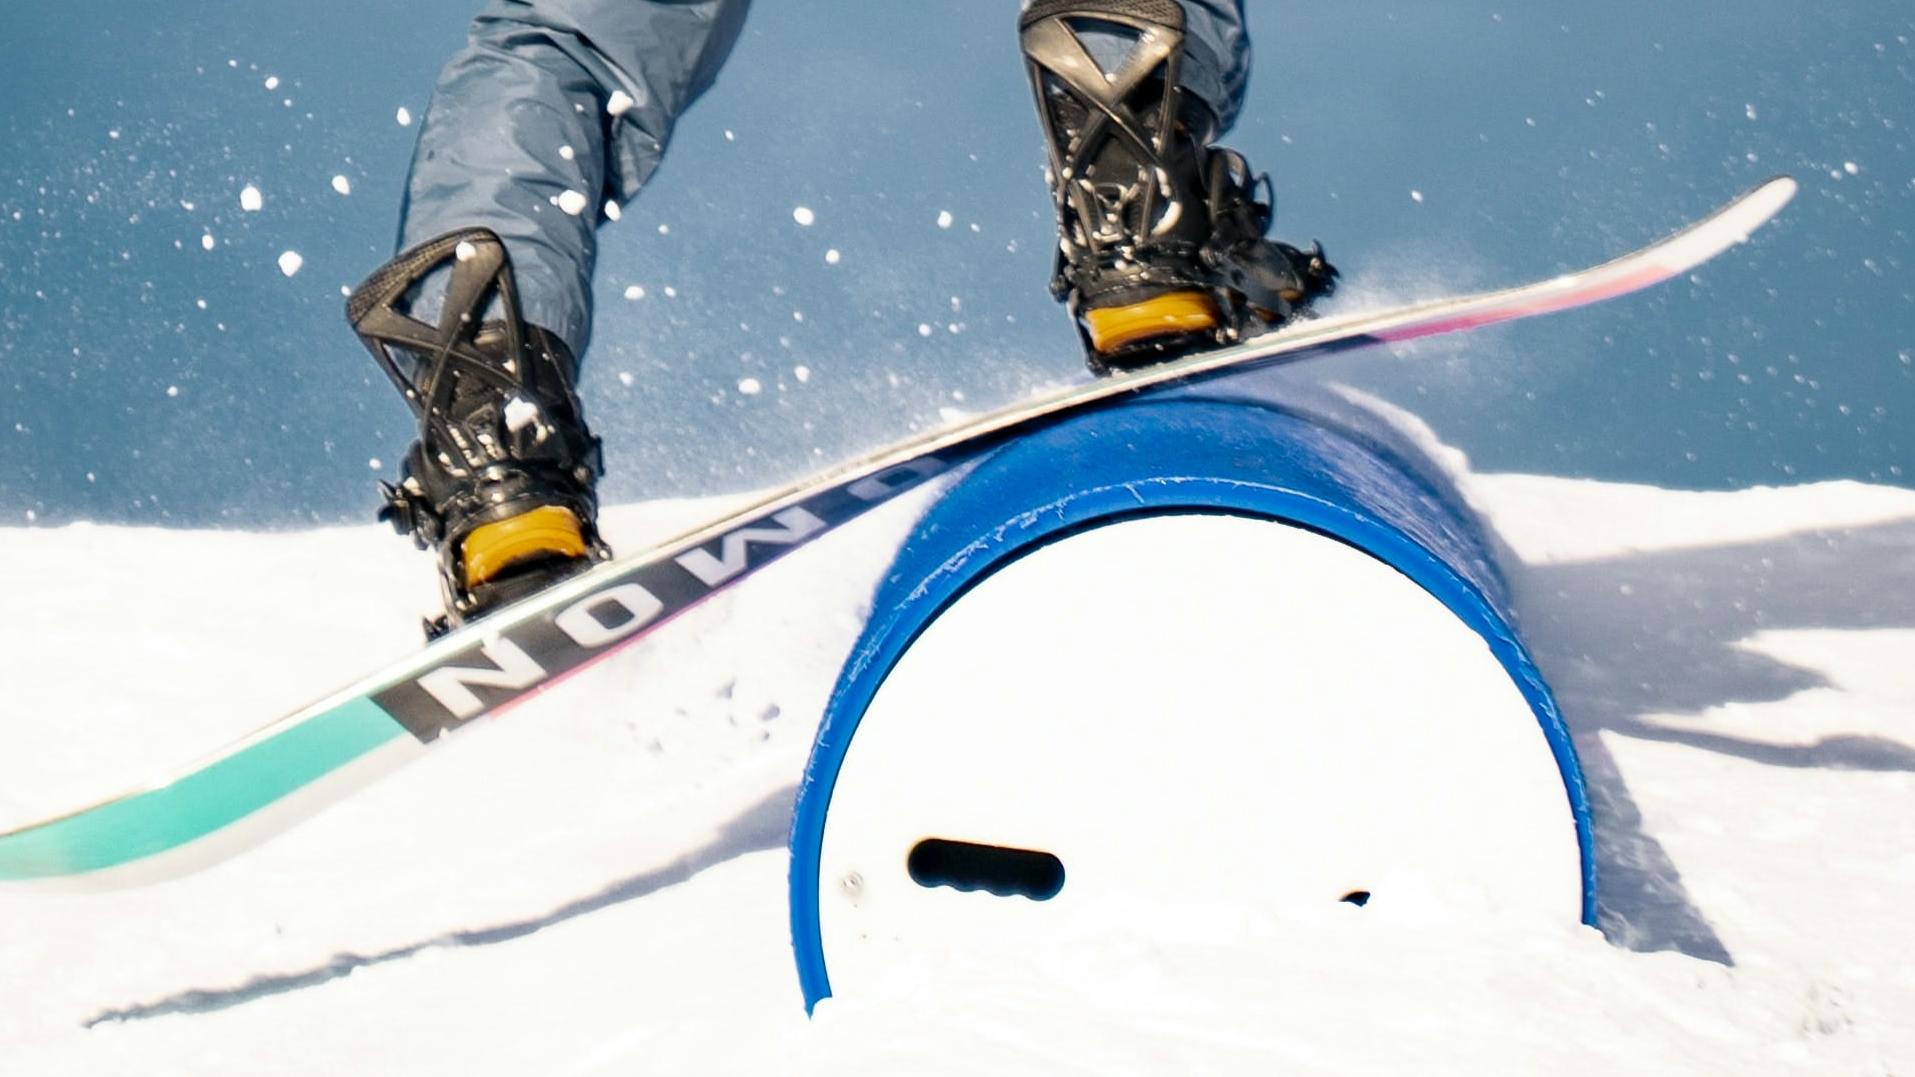 A snowboarder rides a board over a blue tube-like rail. 